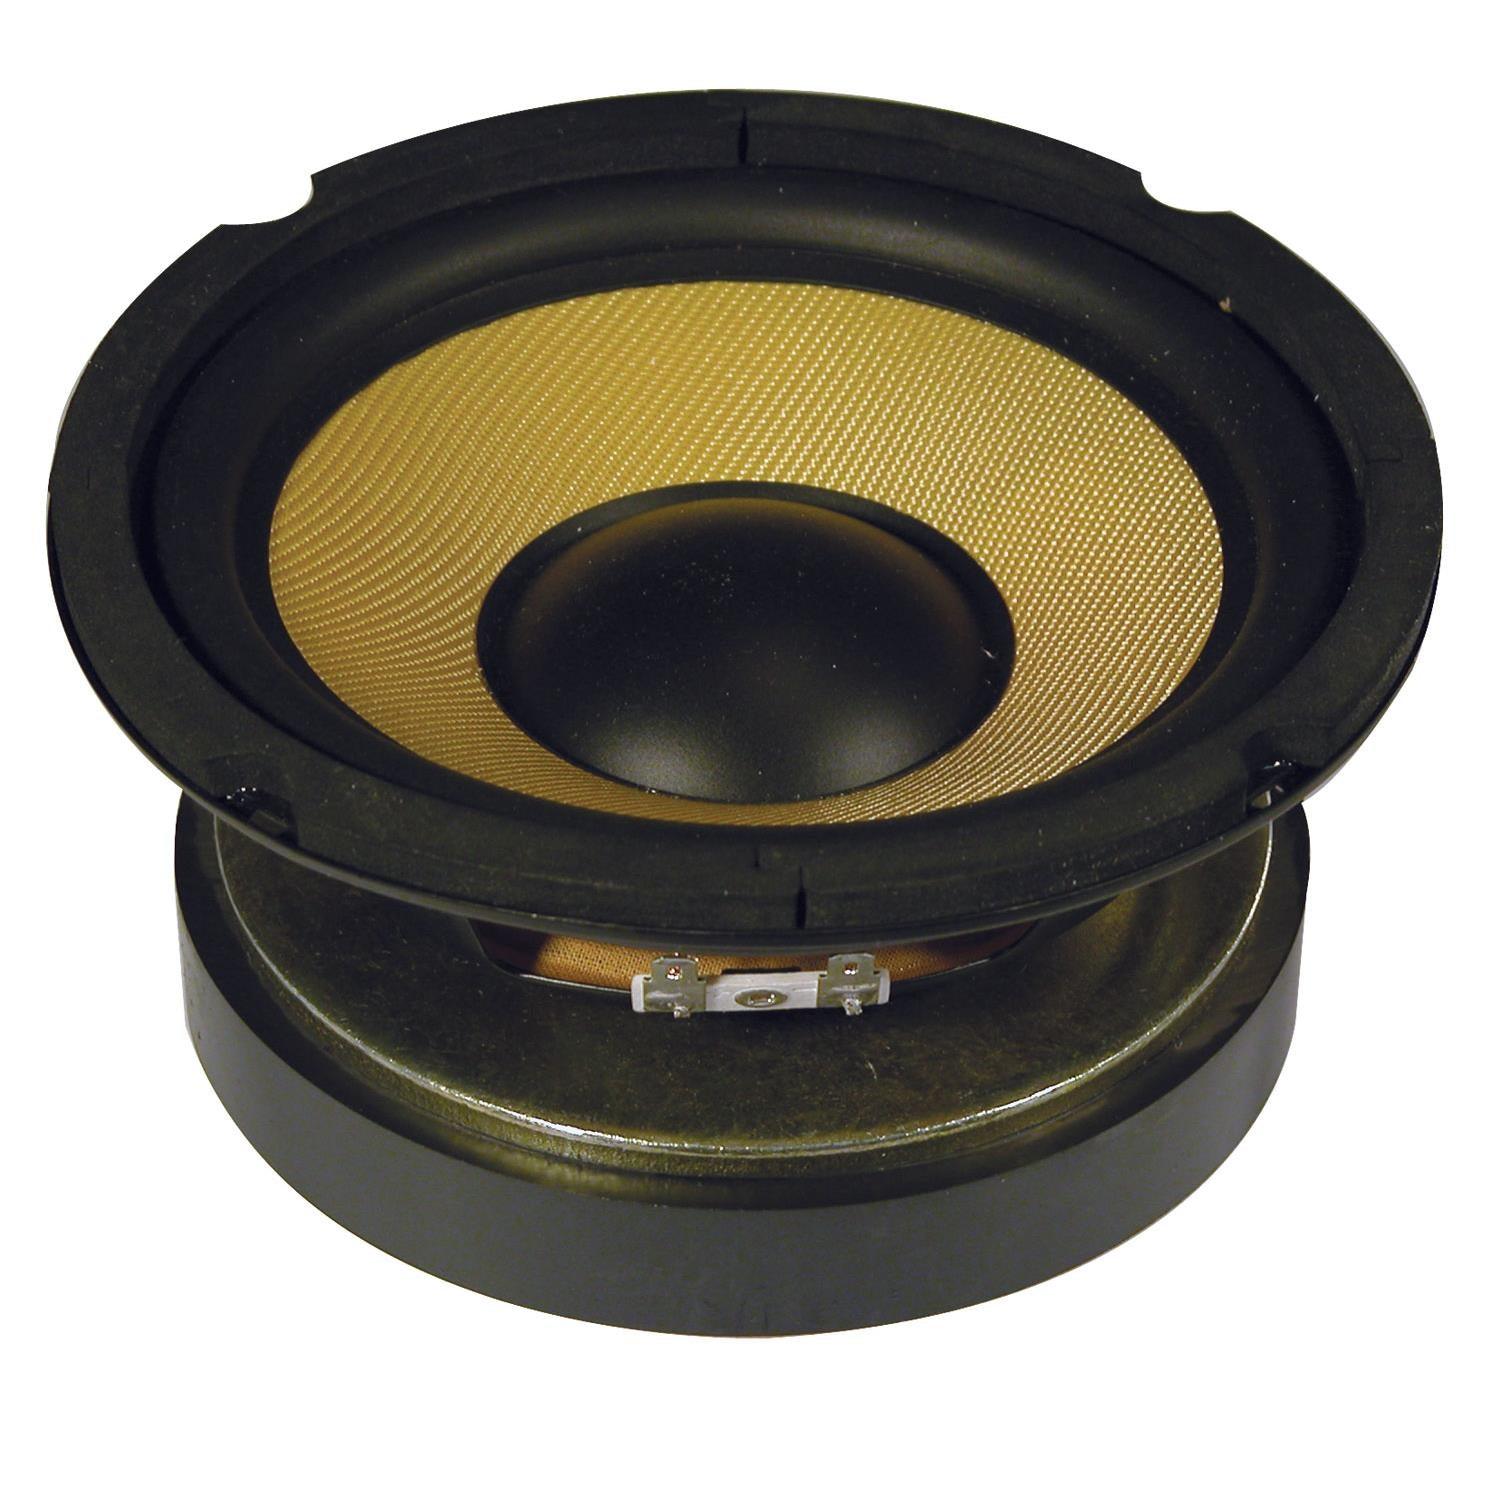 QTX 6" Woofer with Aramid fibre cone - DY Pro Audio